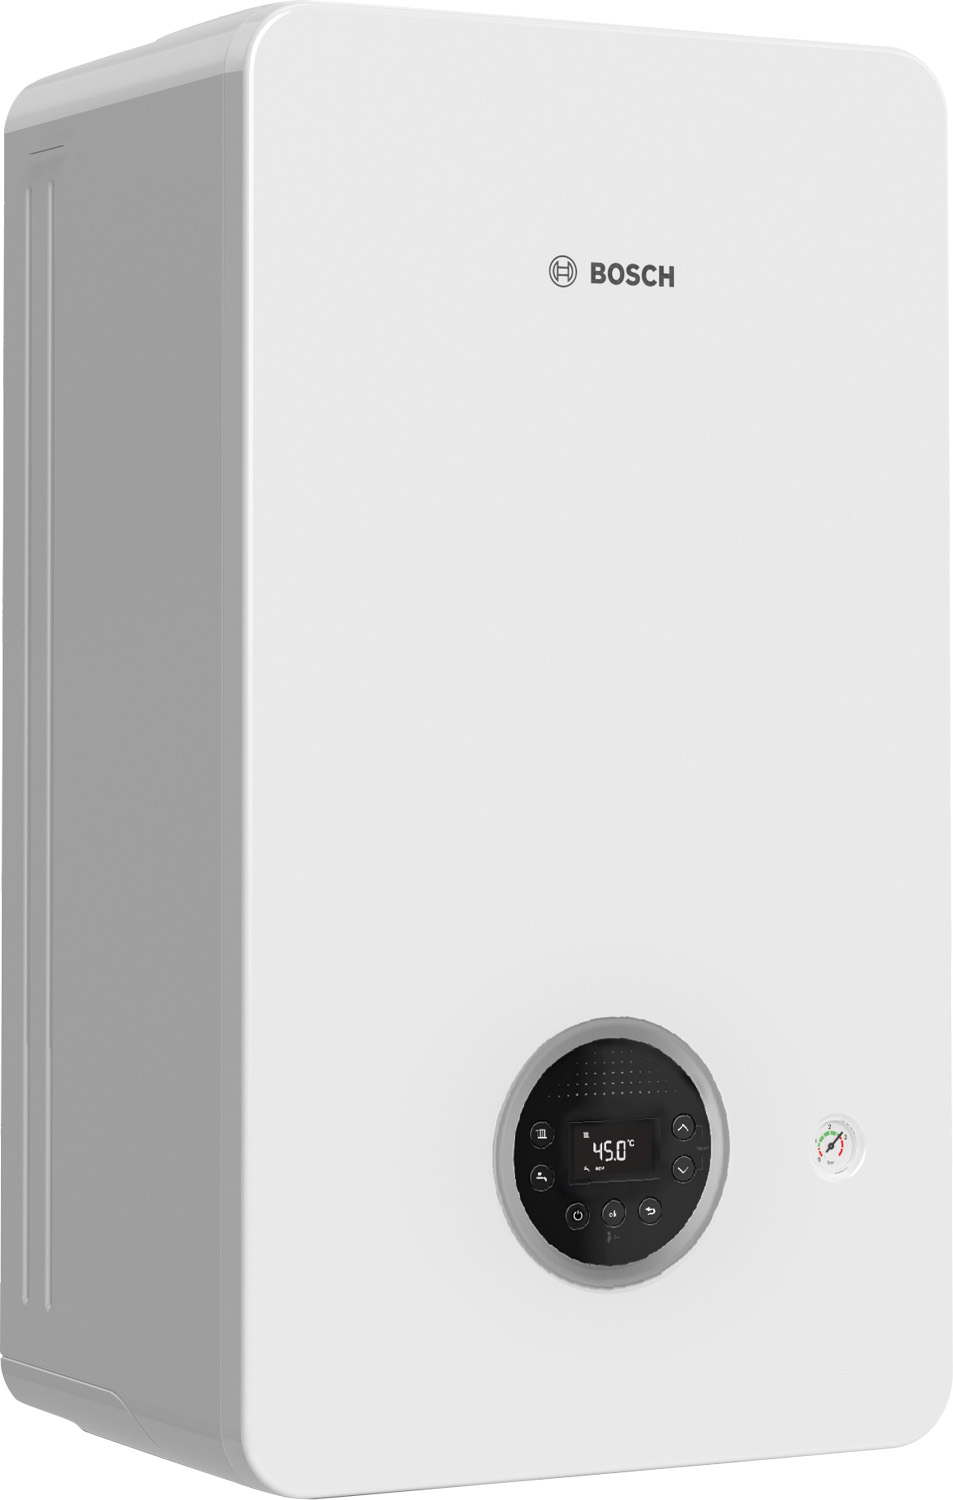 Газовий котел Bosch Condens GC2300iW 24/30 C 23 (7736902153) характеристики - фотографія 7